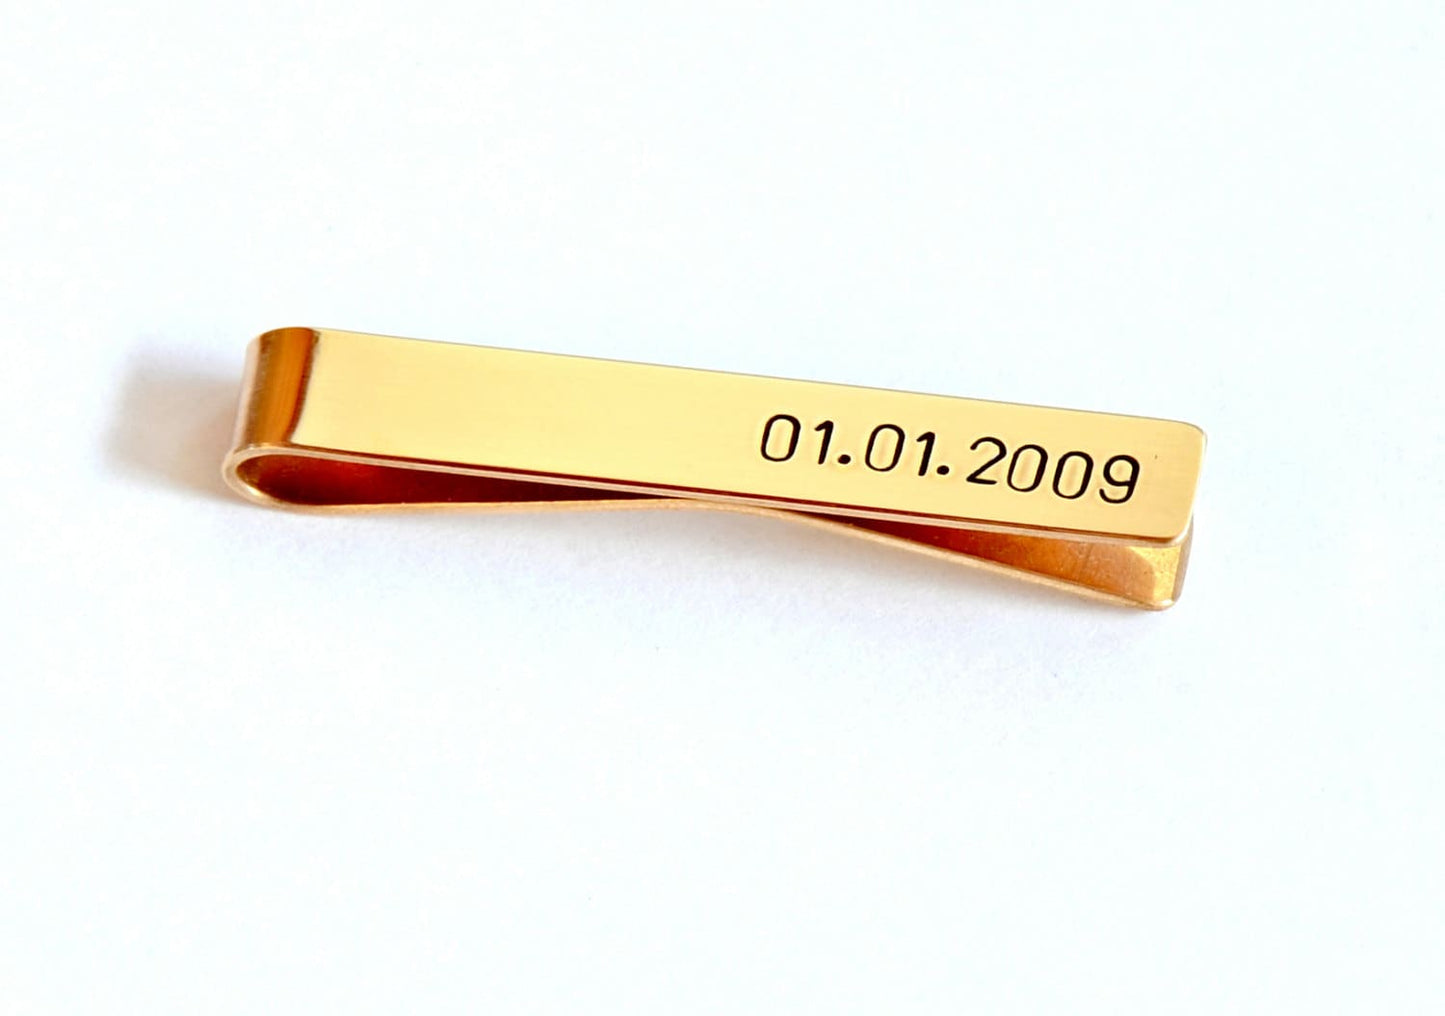 Bronze Tie Clip for the 8th Anniversary - Personalized Tie Bar